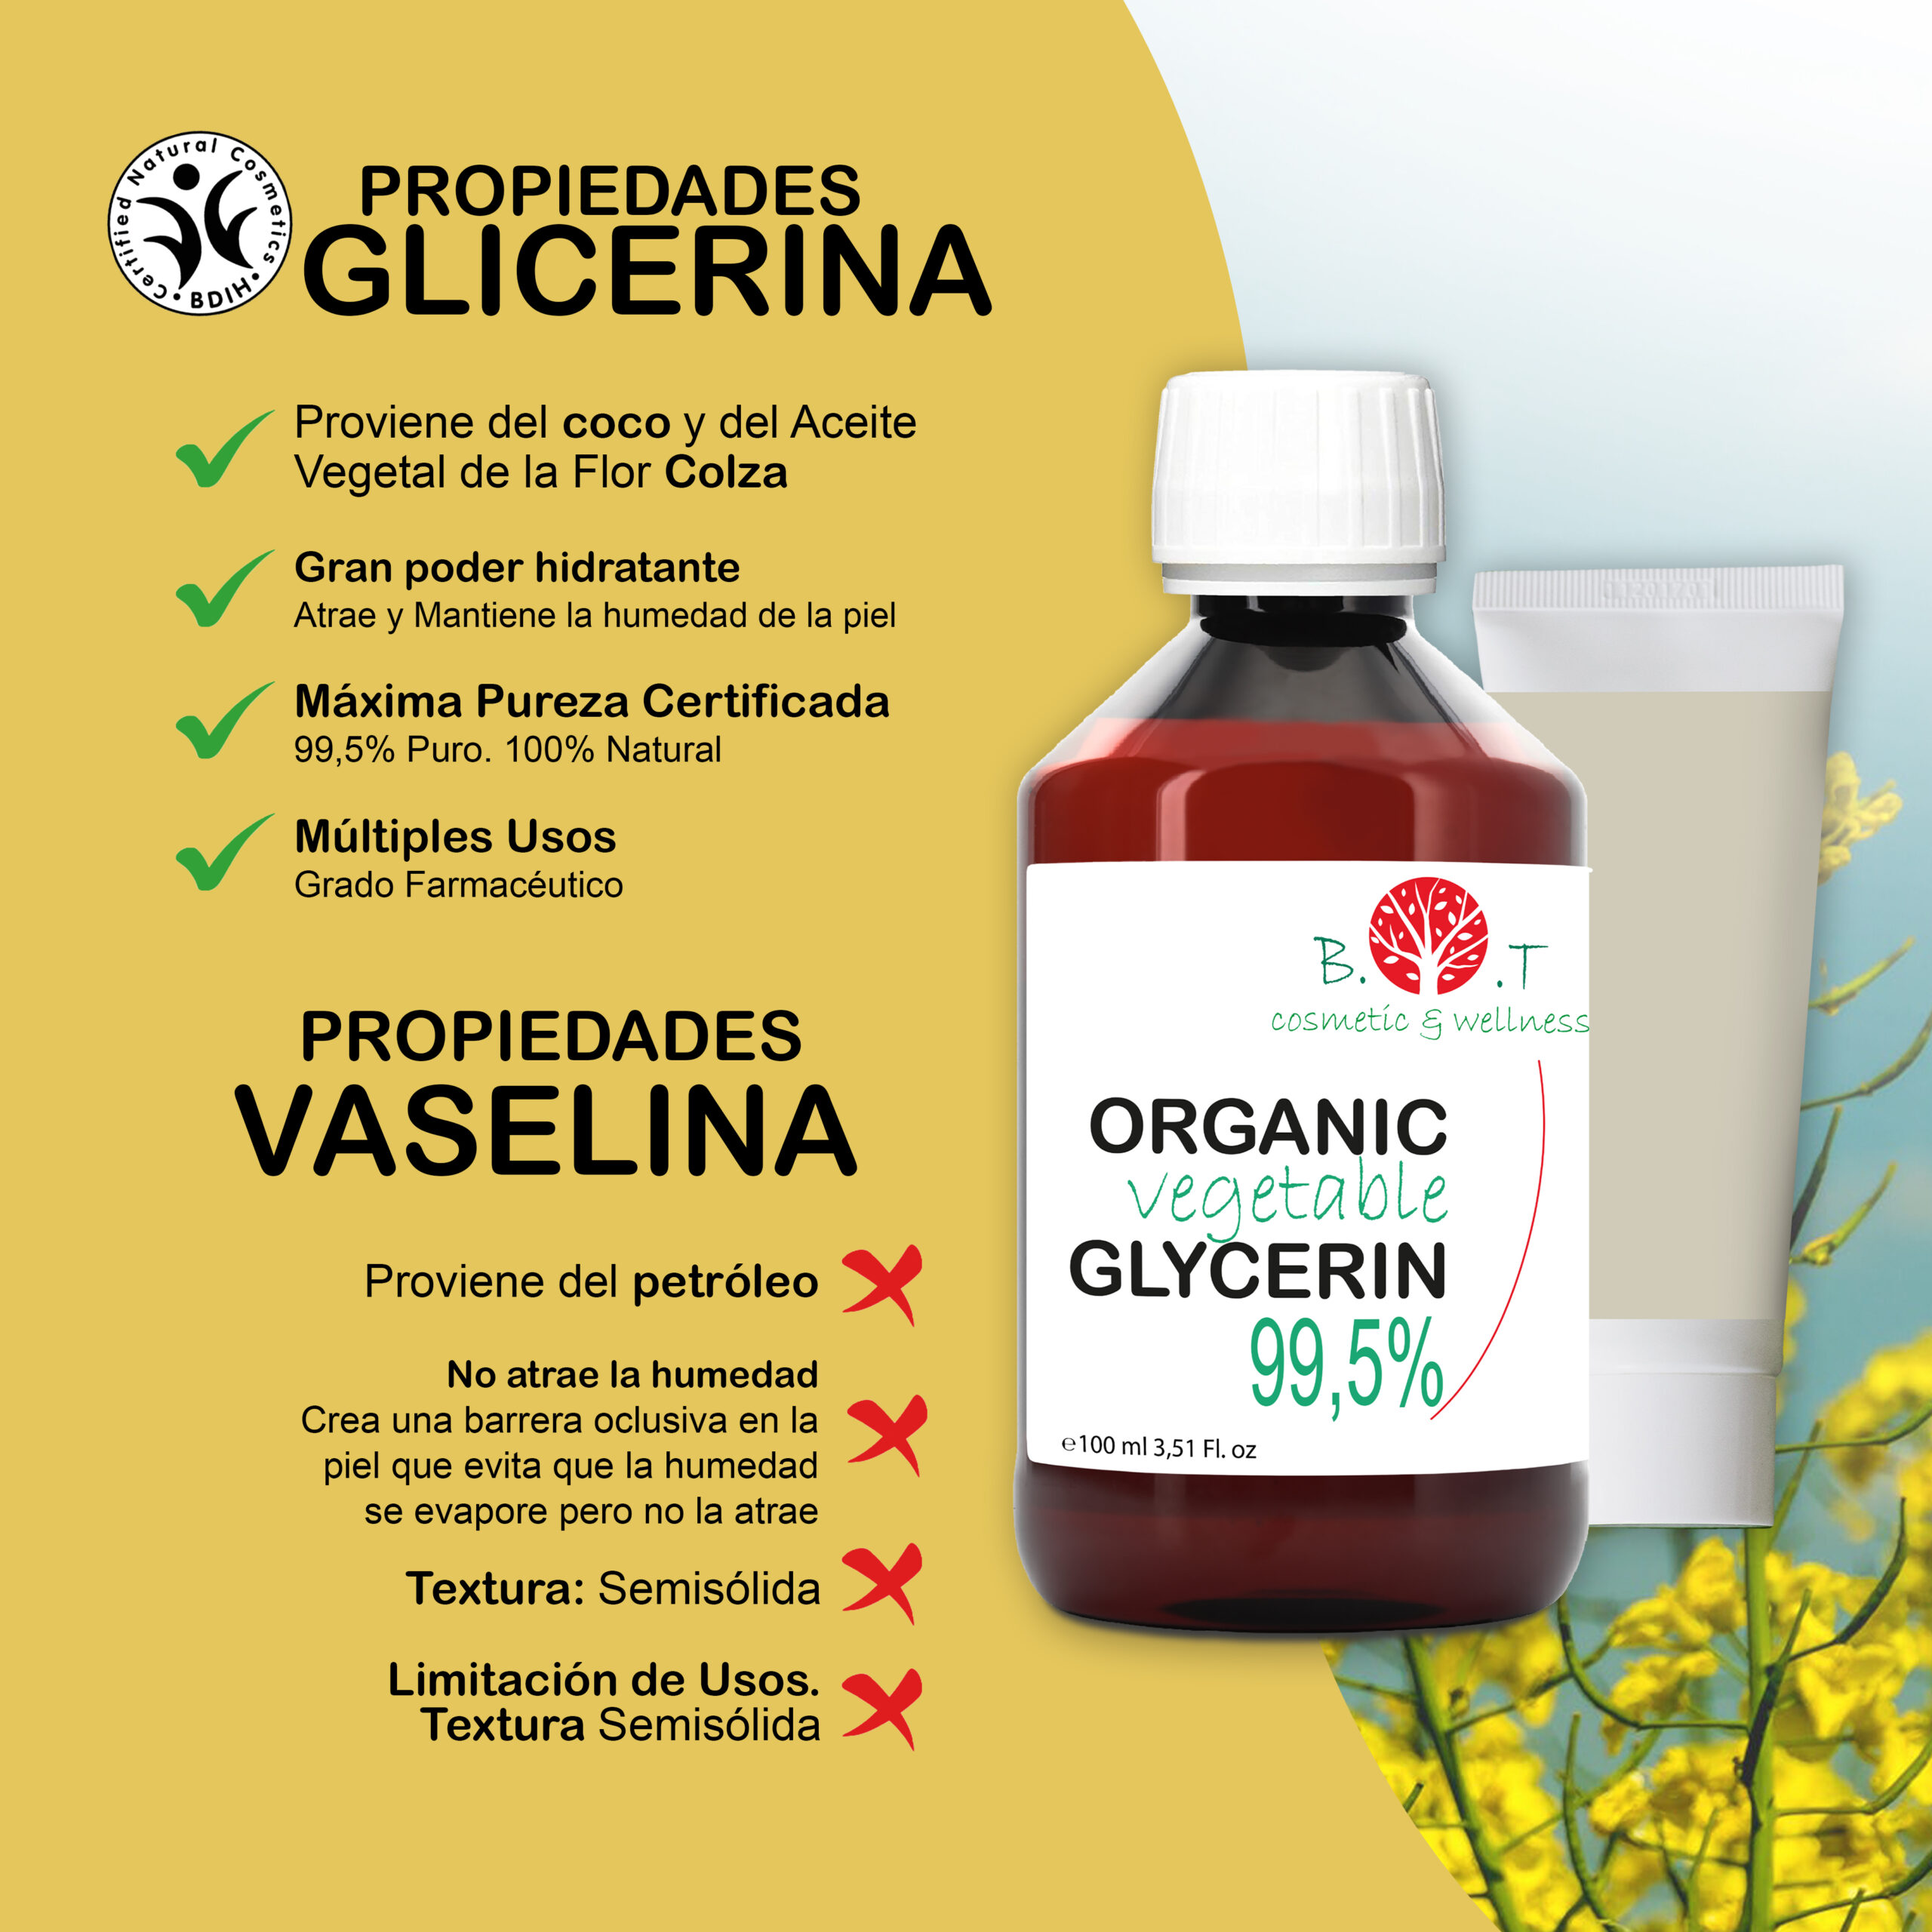 https://esteticmundo.com/wp-content/uploads/2022/11/glicerina-organica-mejor-que-la-vaselina-scaled.jpg